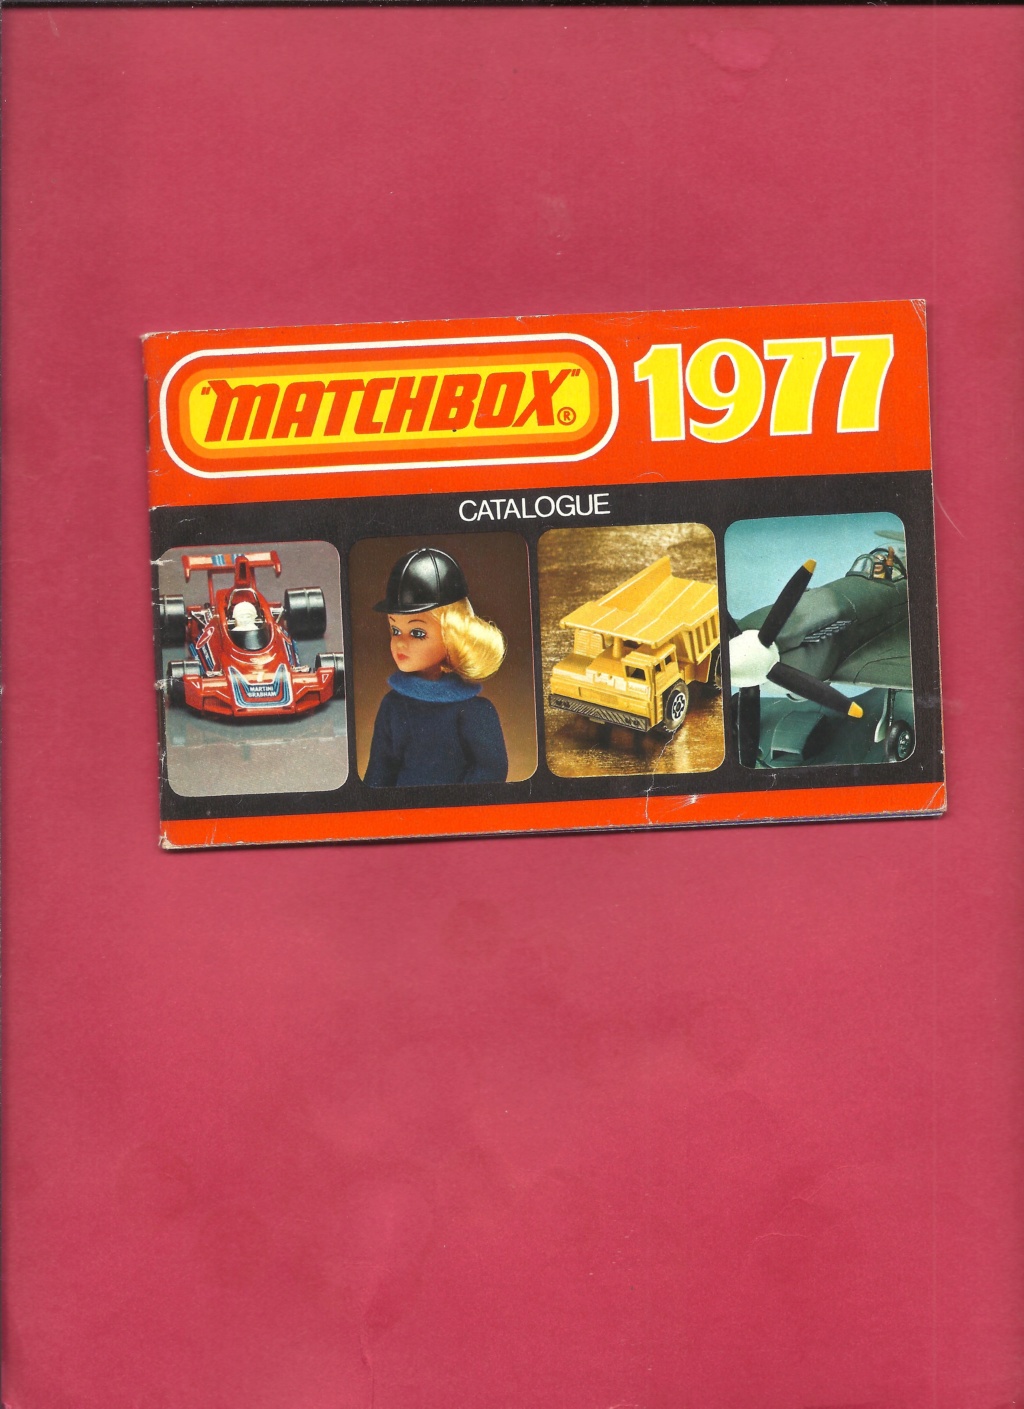 [MATCHBOX 1977] Mini catalogue général 1977 Matchb73